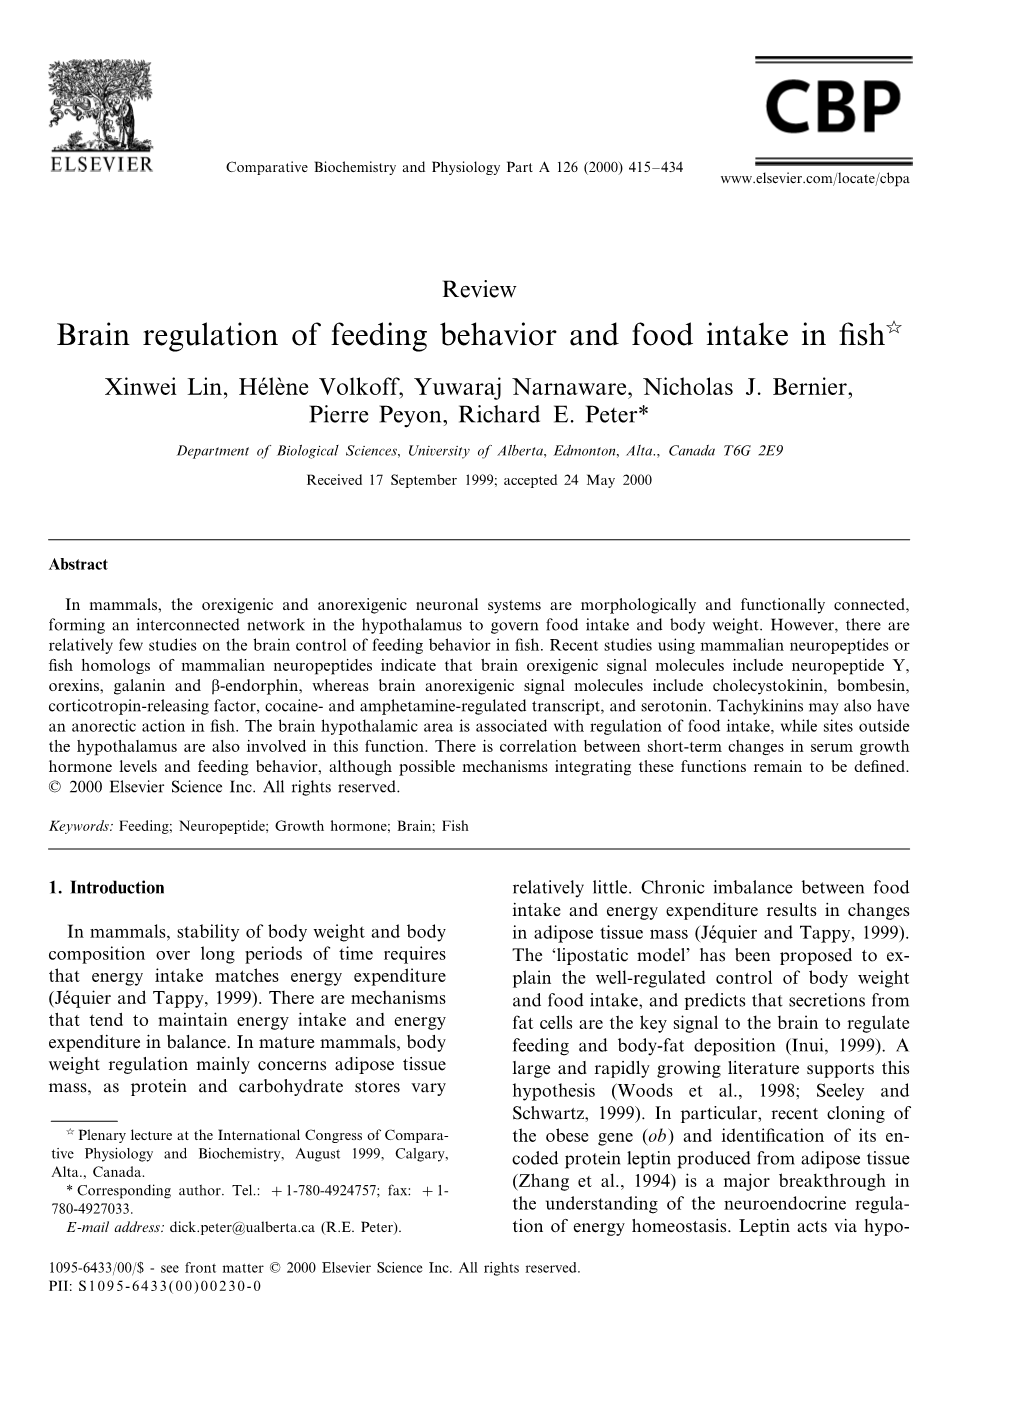 Brain Regulation of Feeding Behavior and Food Intake in Fish